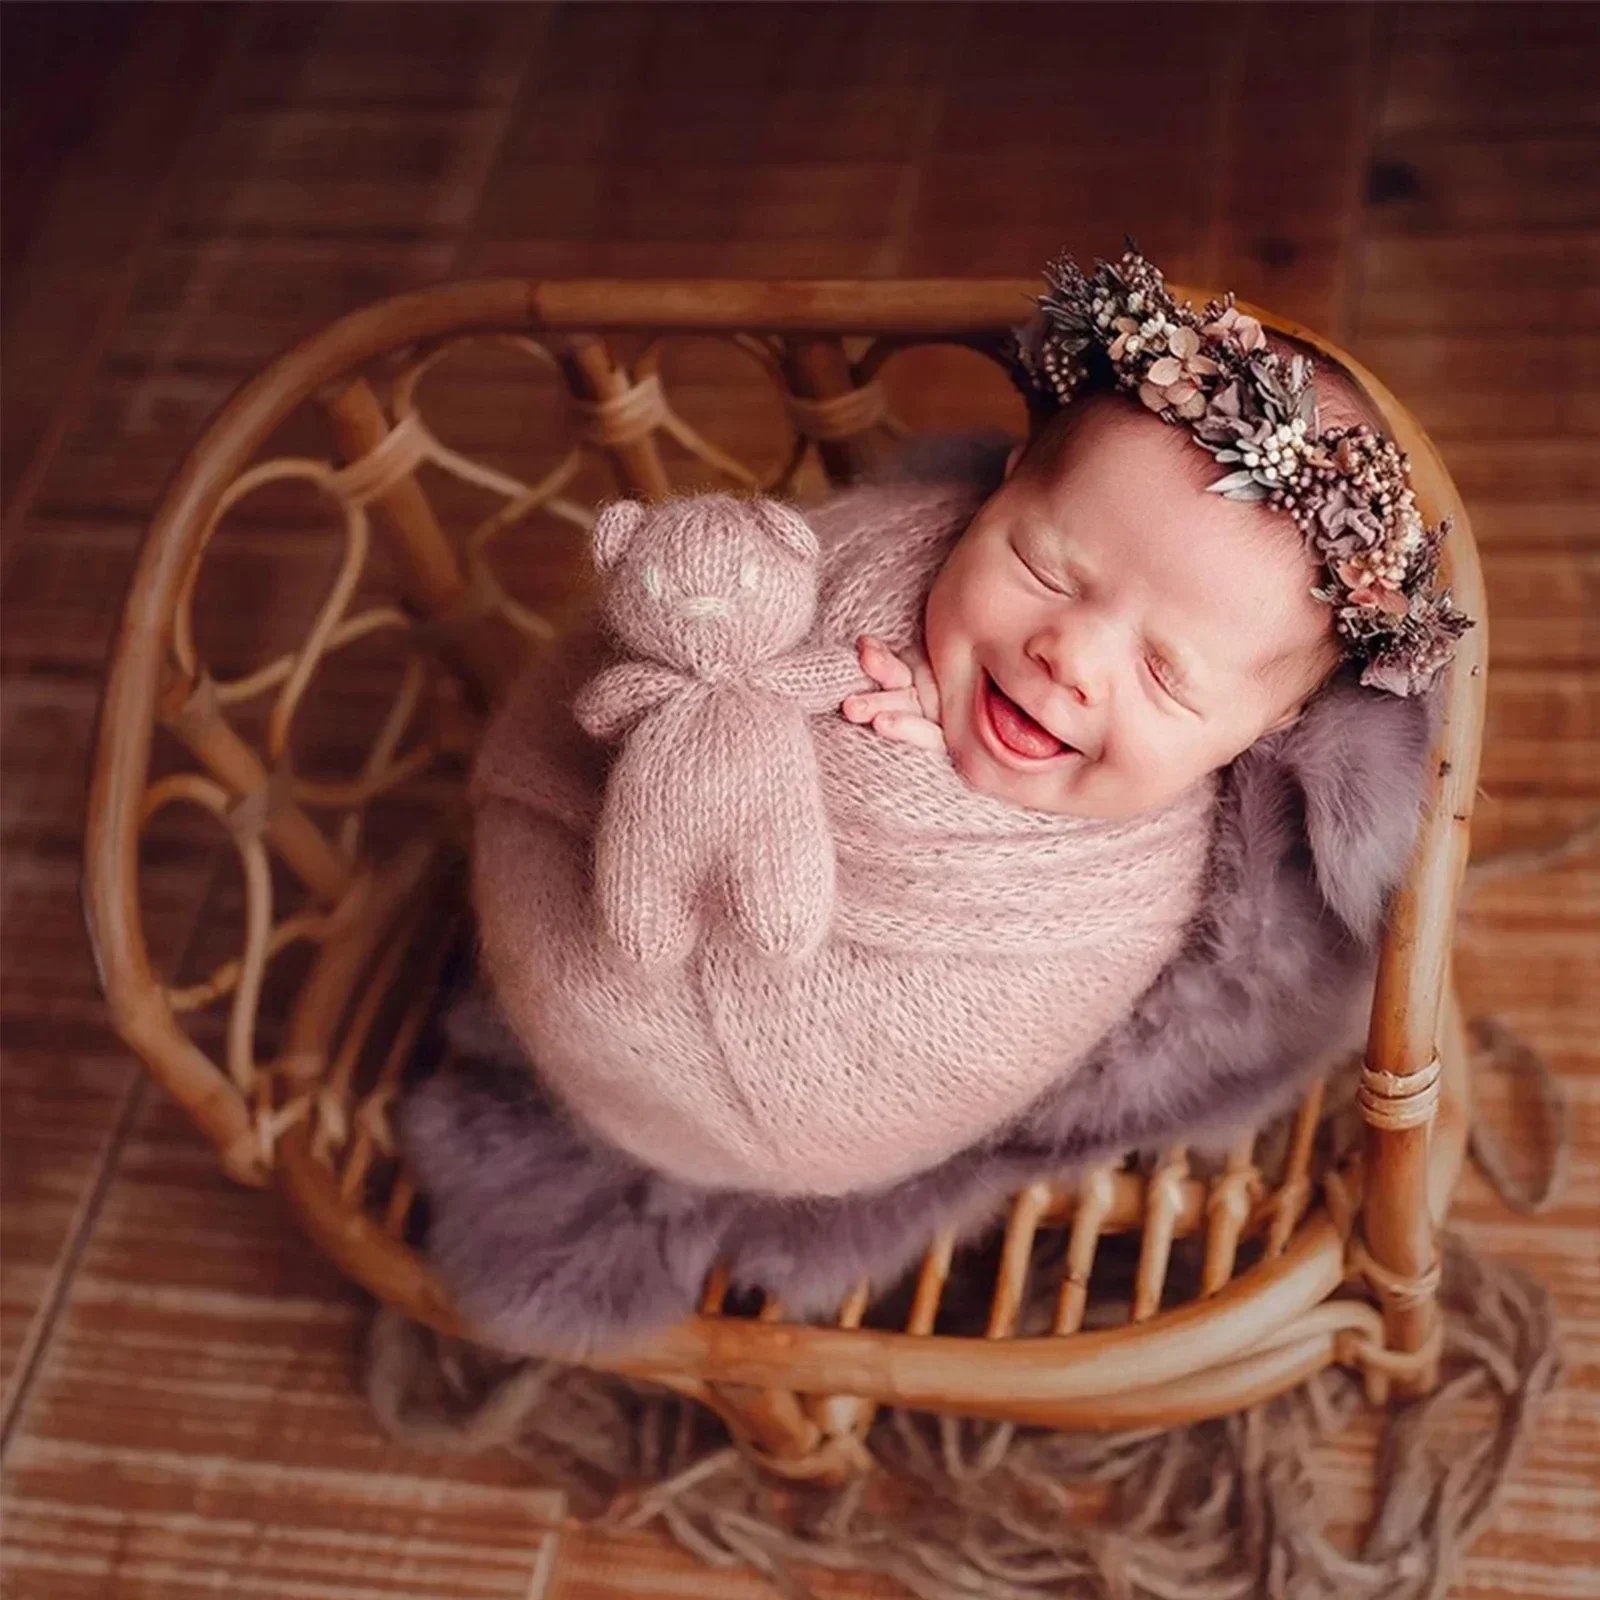 

Newborn Photography Props Wooden Bed Baby Sofa Rattan Chair Furniture Baby Crib Bench Fotografia Studio Posing Sofa Accessories